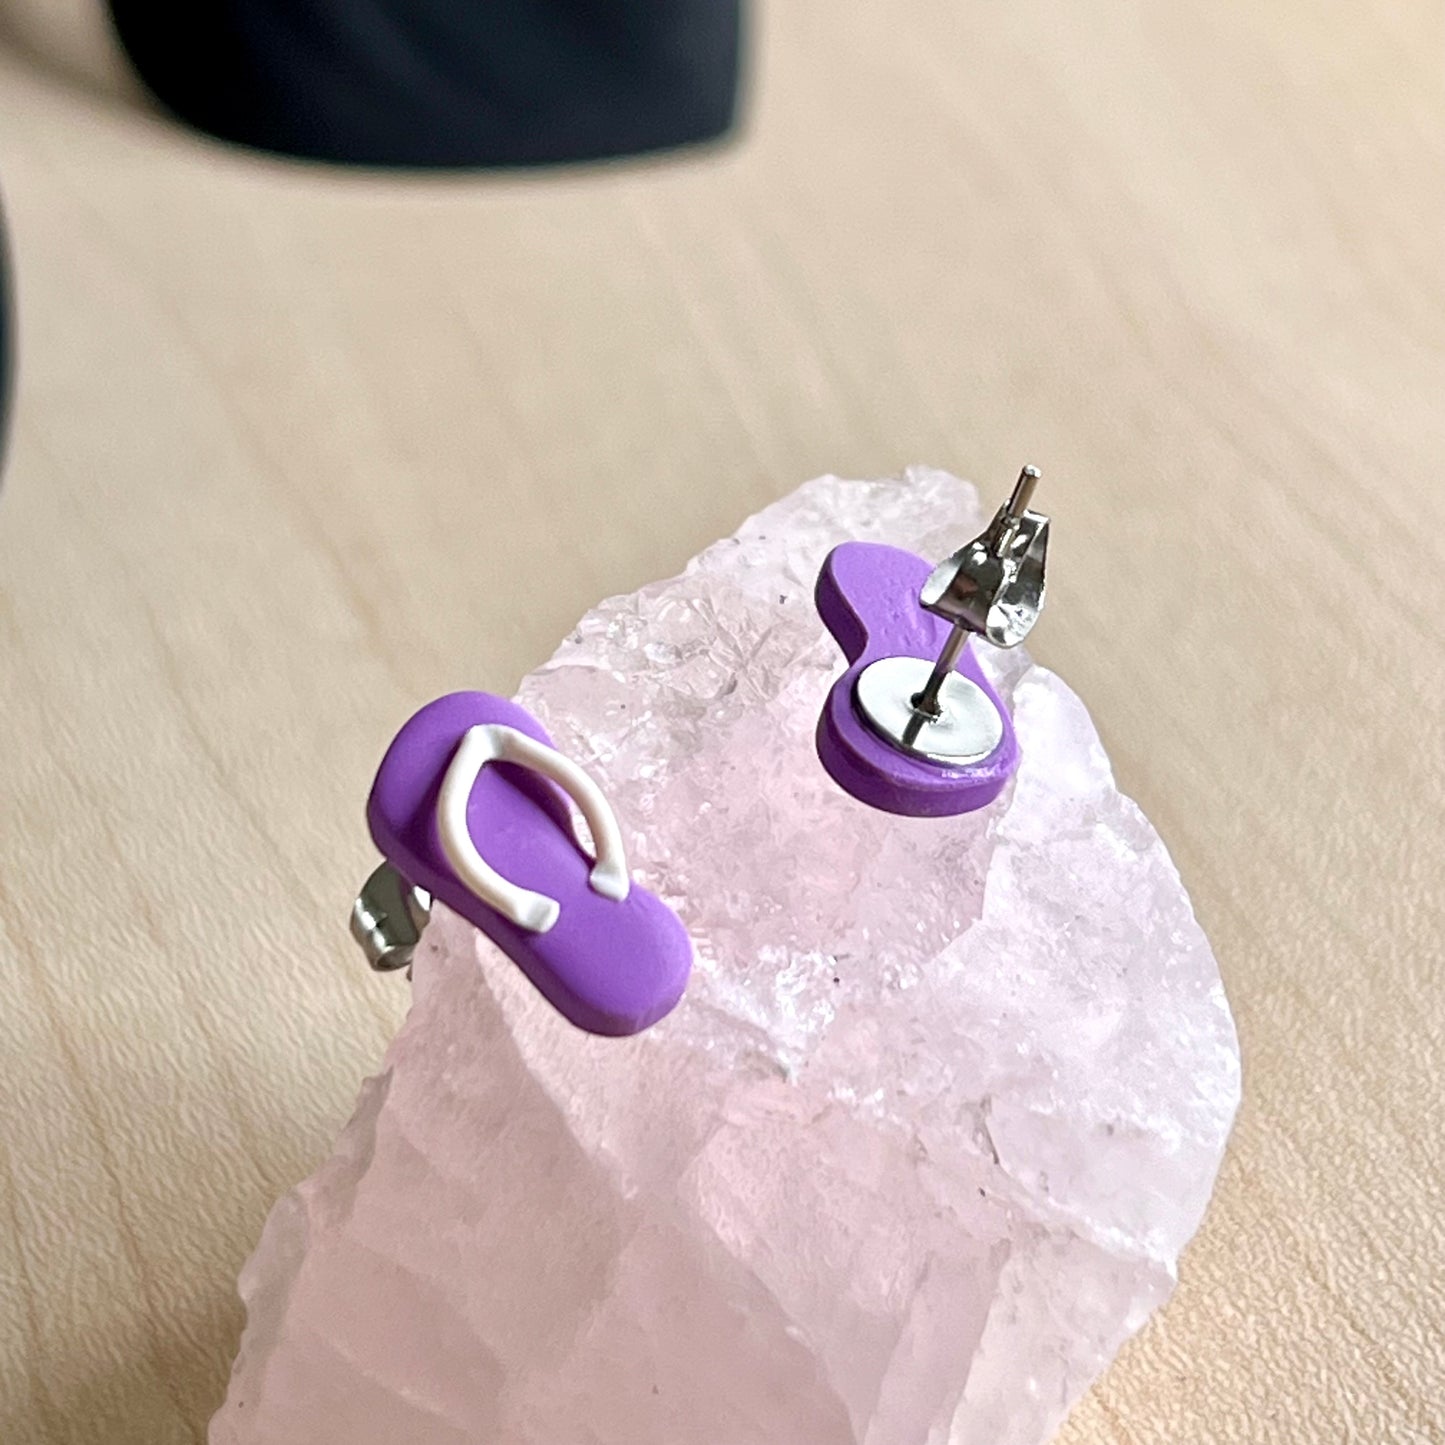 Thongs / flip flops studs, purple with white, handmade earrings